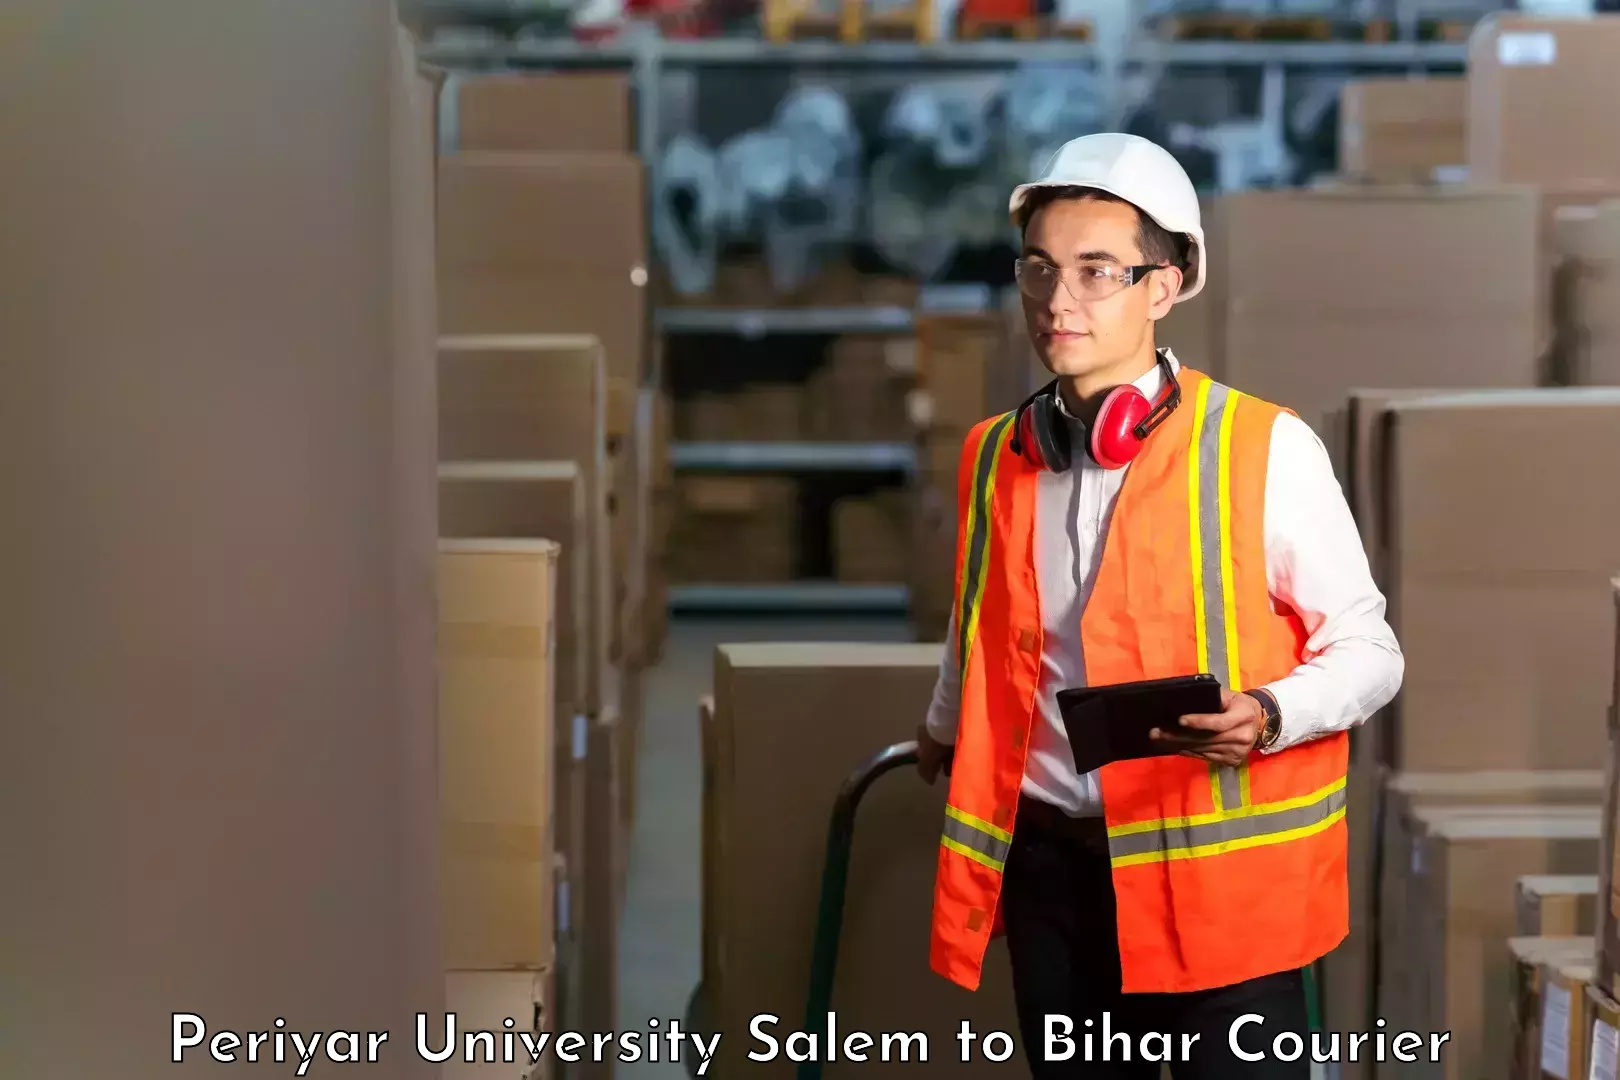 User-friendly courier app Periyar University Salem to Bihar